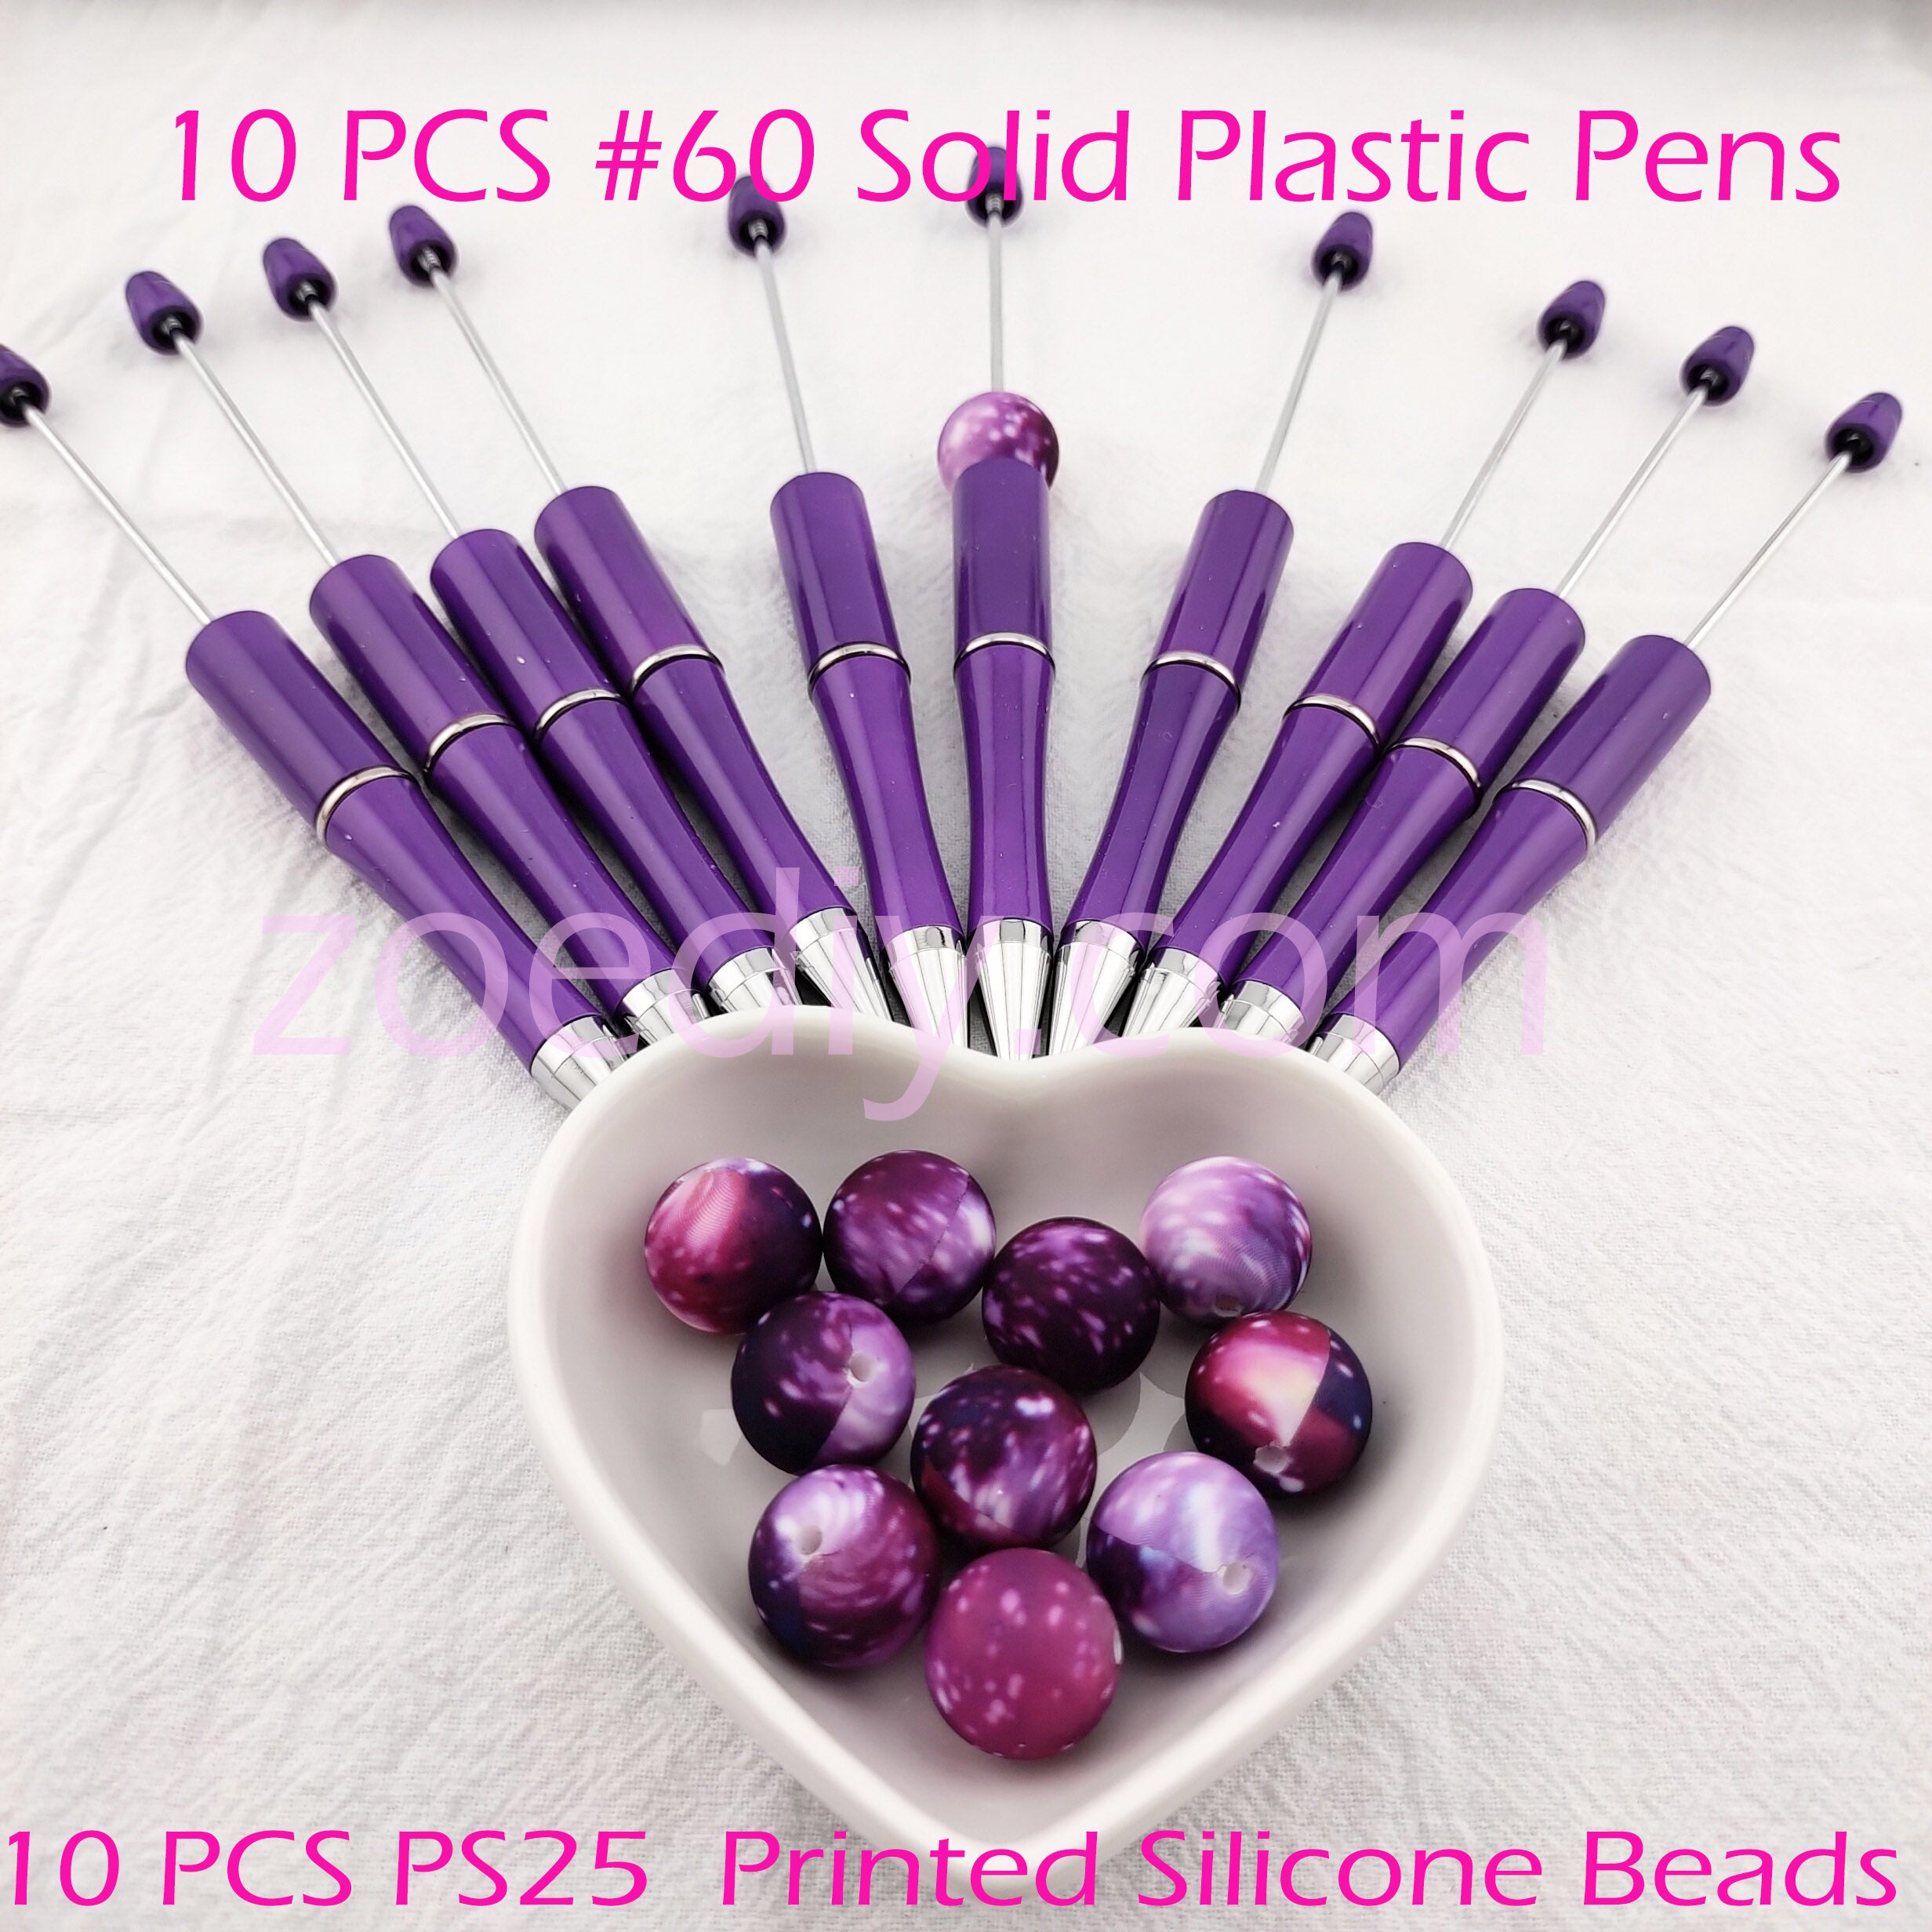 10 PCS Purple #60 Solid Plastic Pens + 10 PCS PS25 Printed Silicone Beads SET